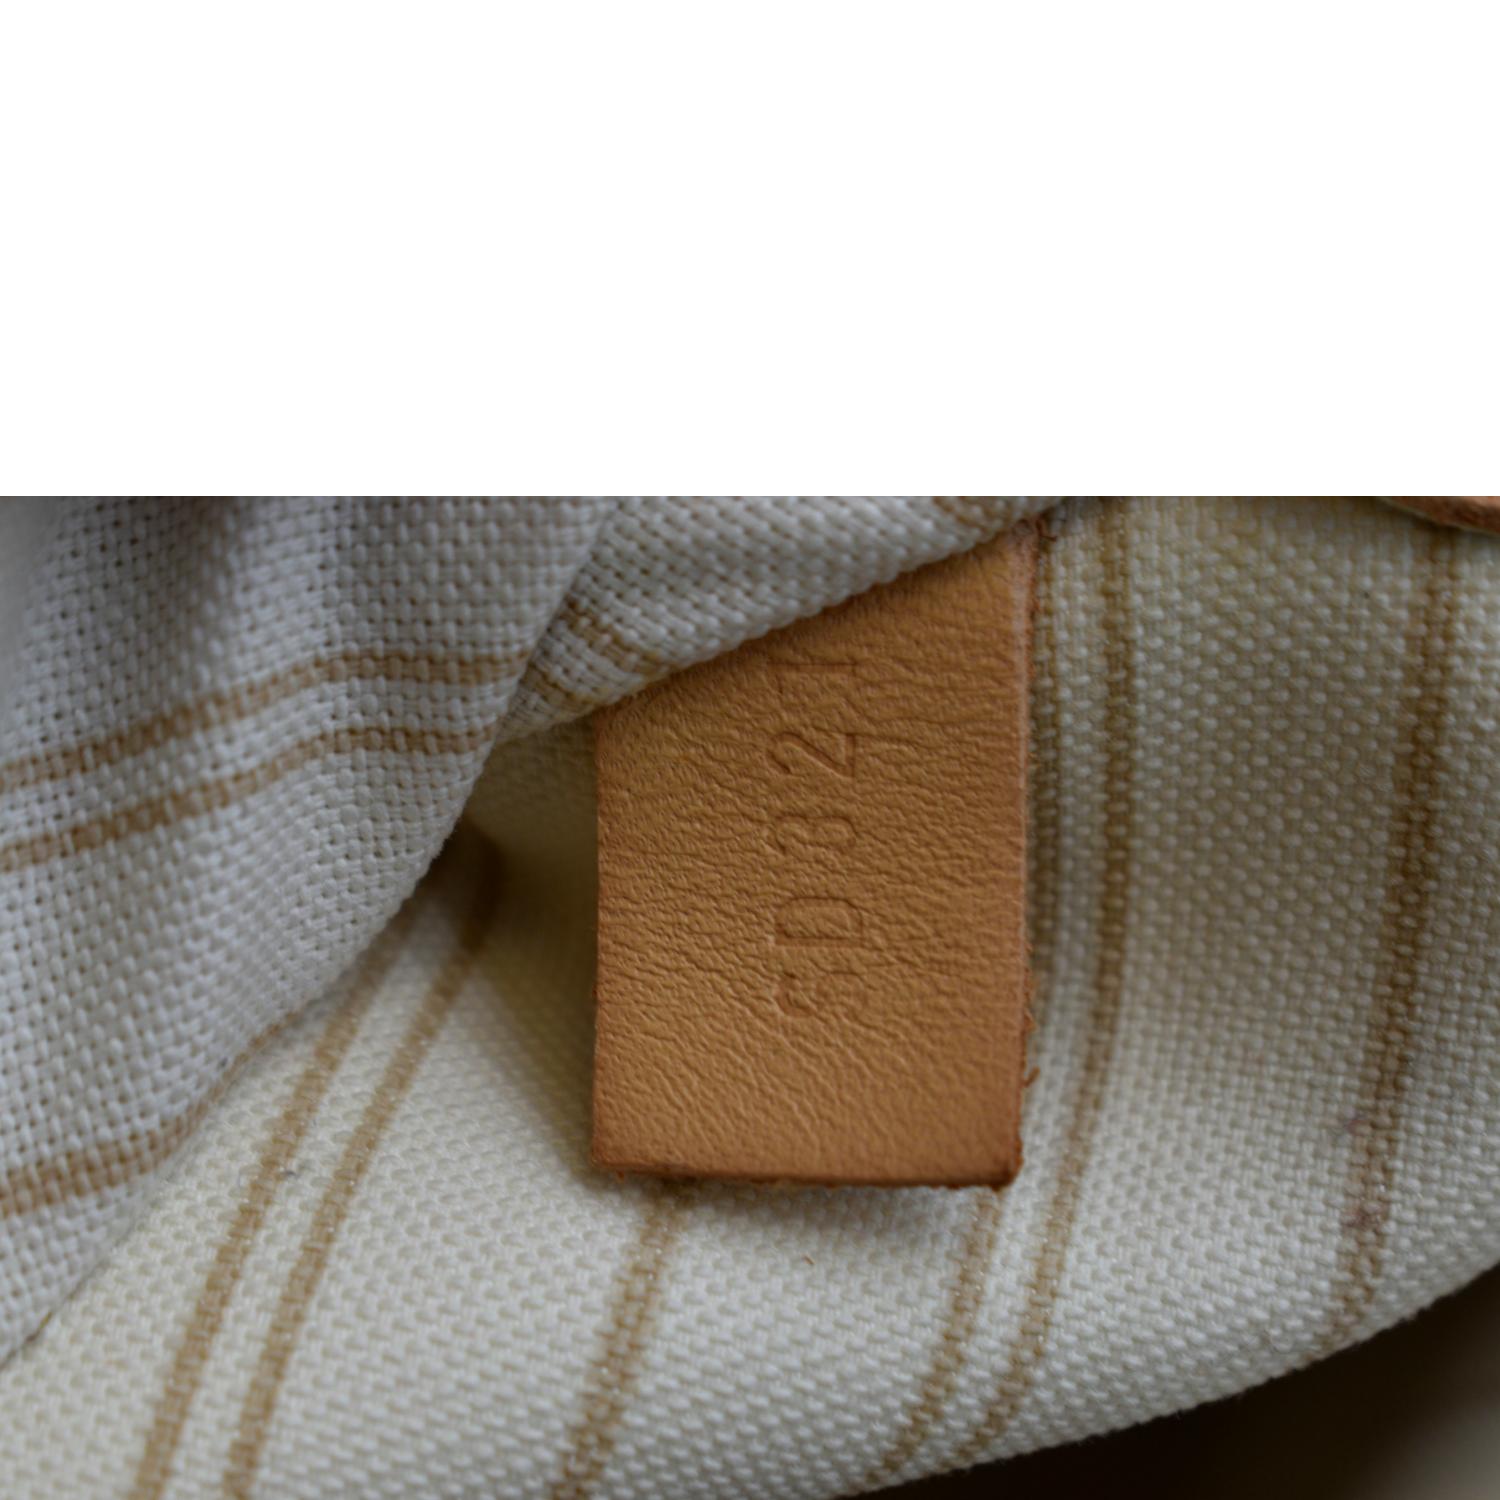 Louis Vuitton Neverfull MM Azur Damier White - $950 - From Fancy